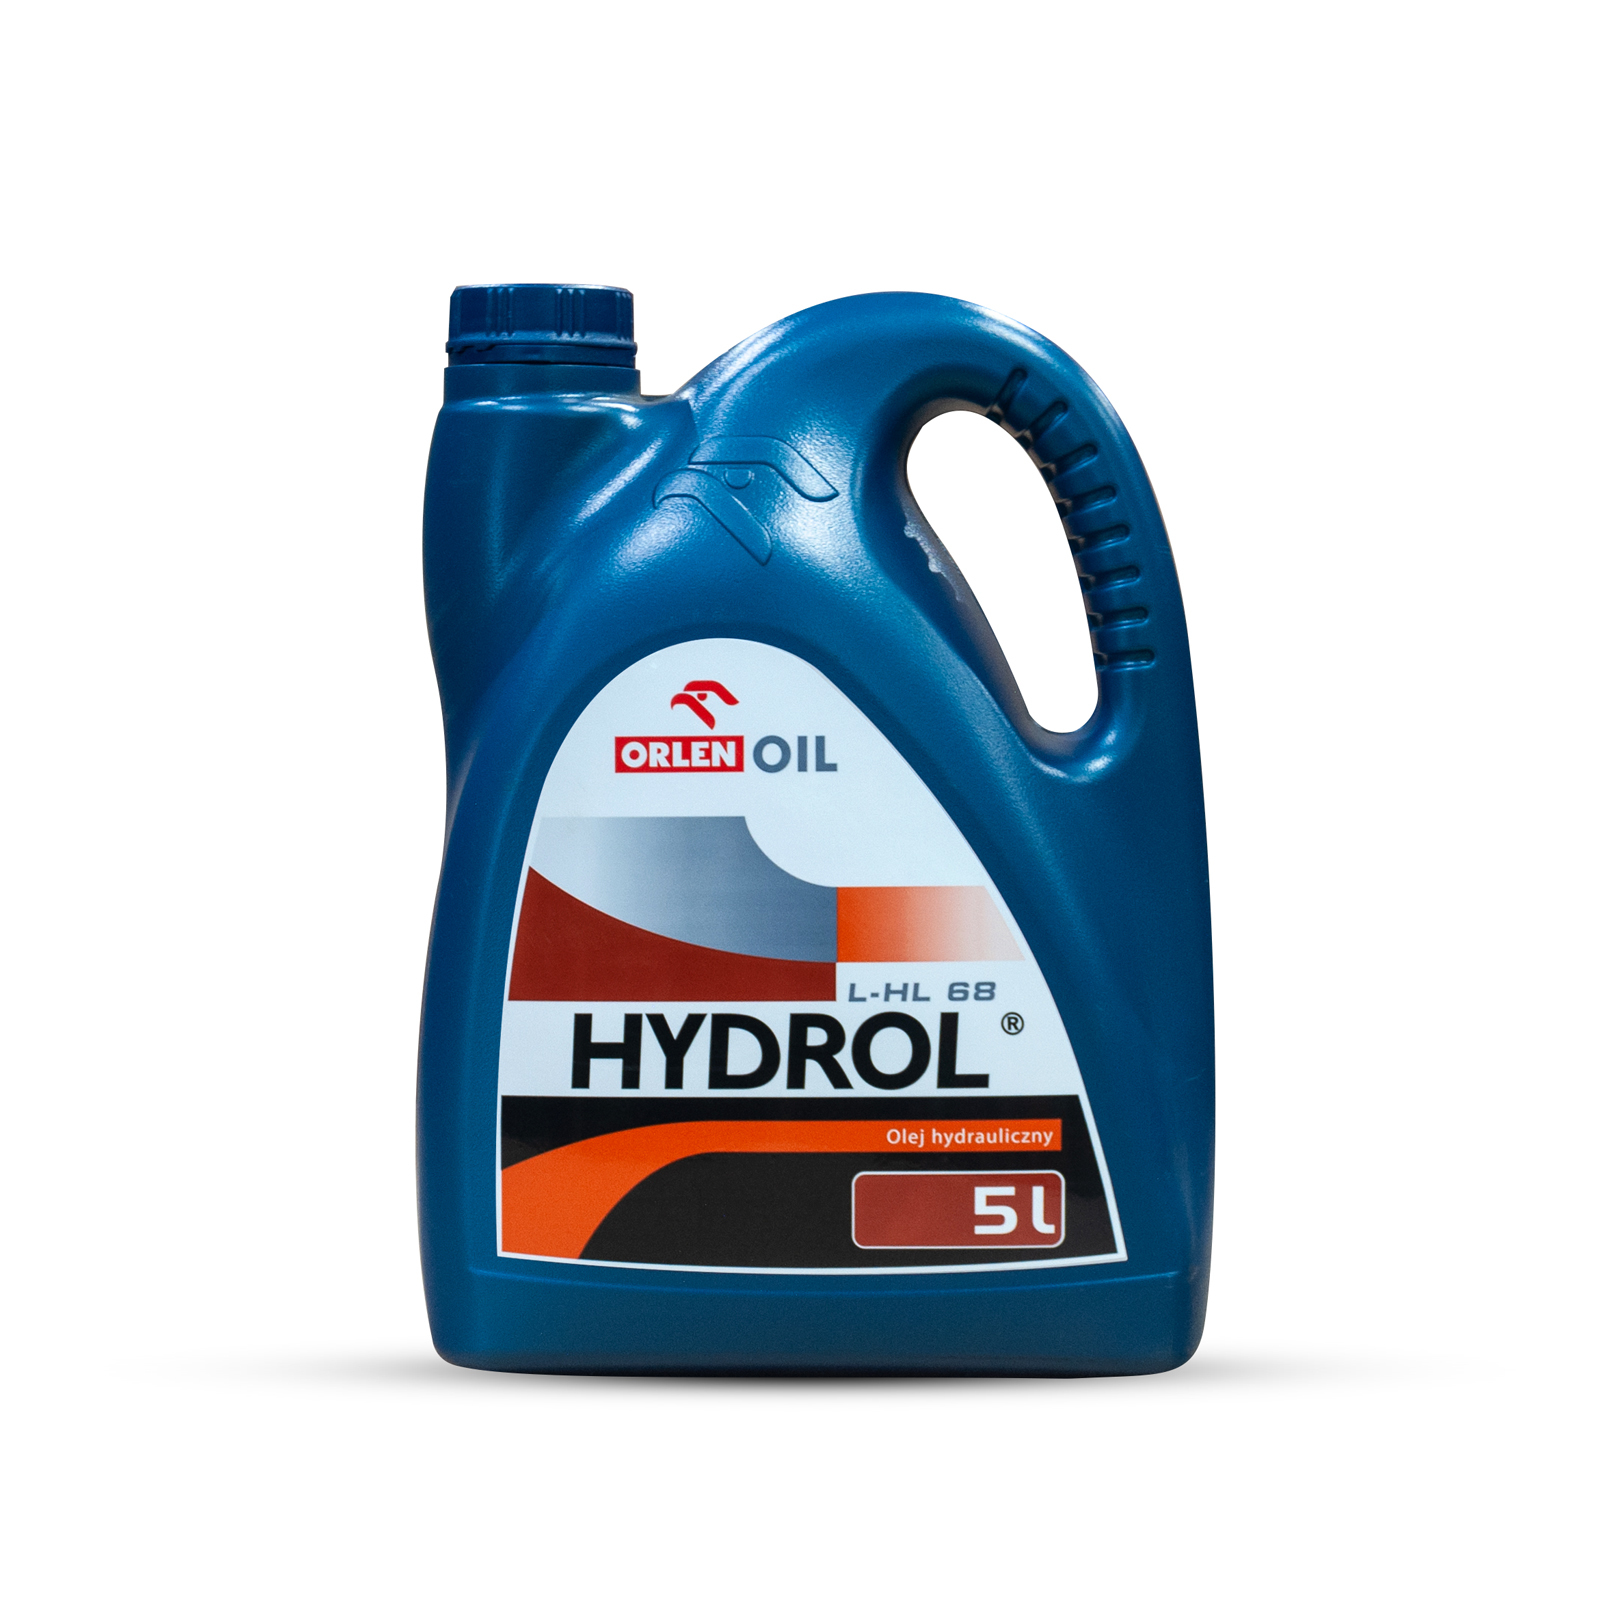 OrlenOil HYDROL L-HL 68 Гидравлическое масло